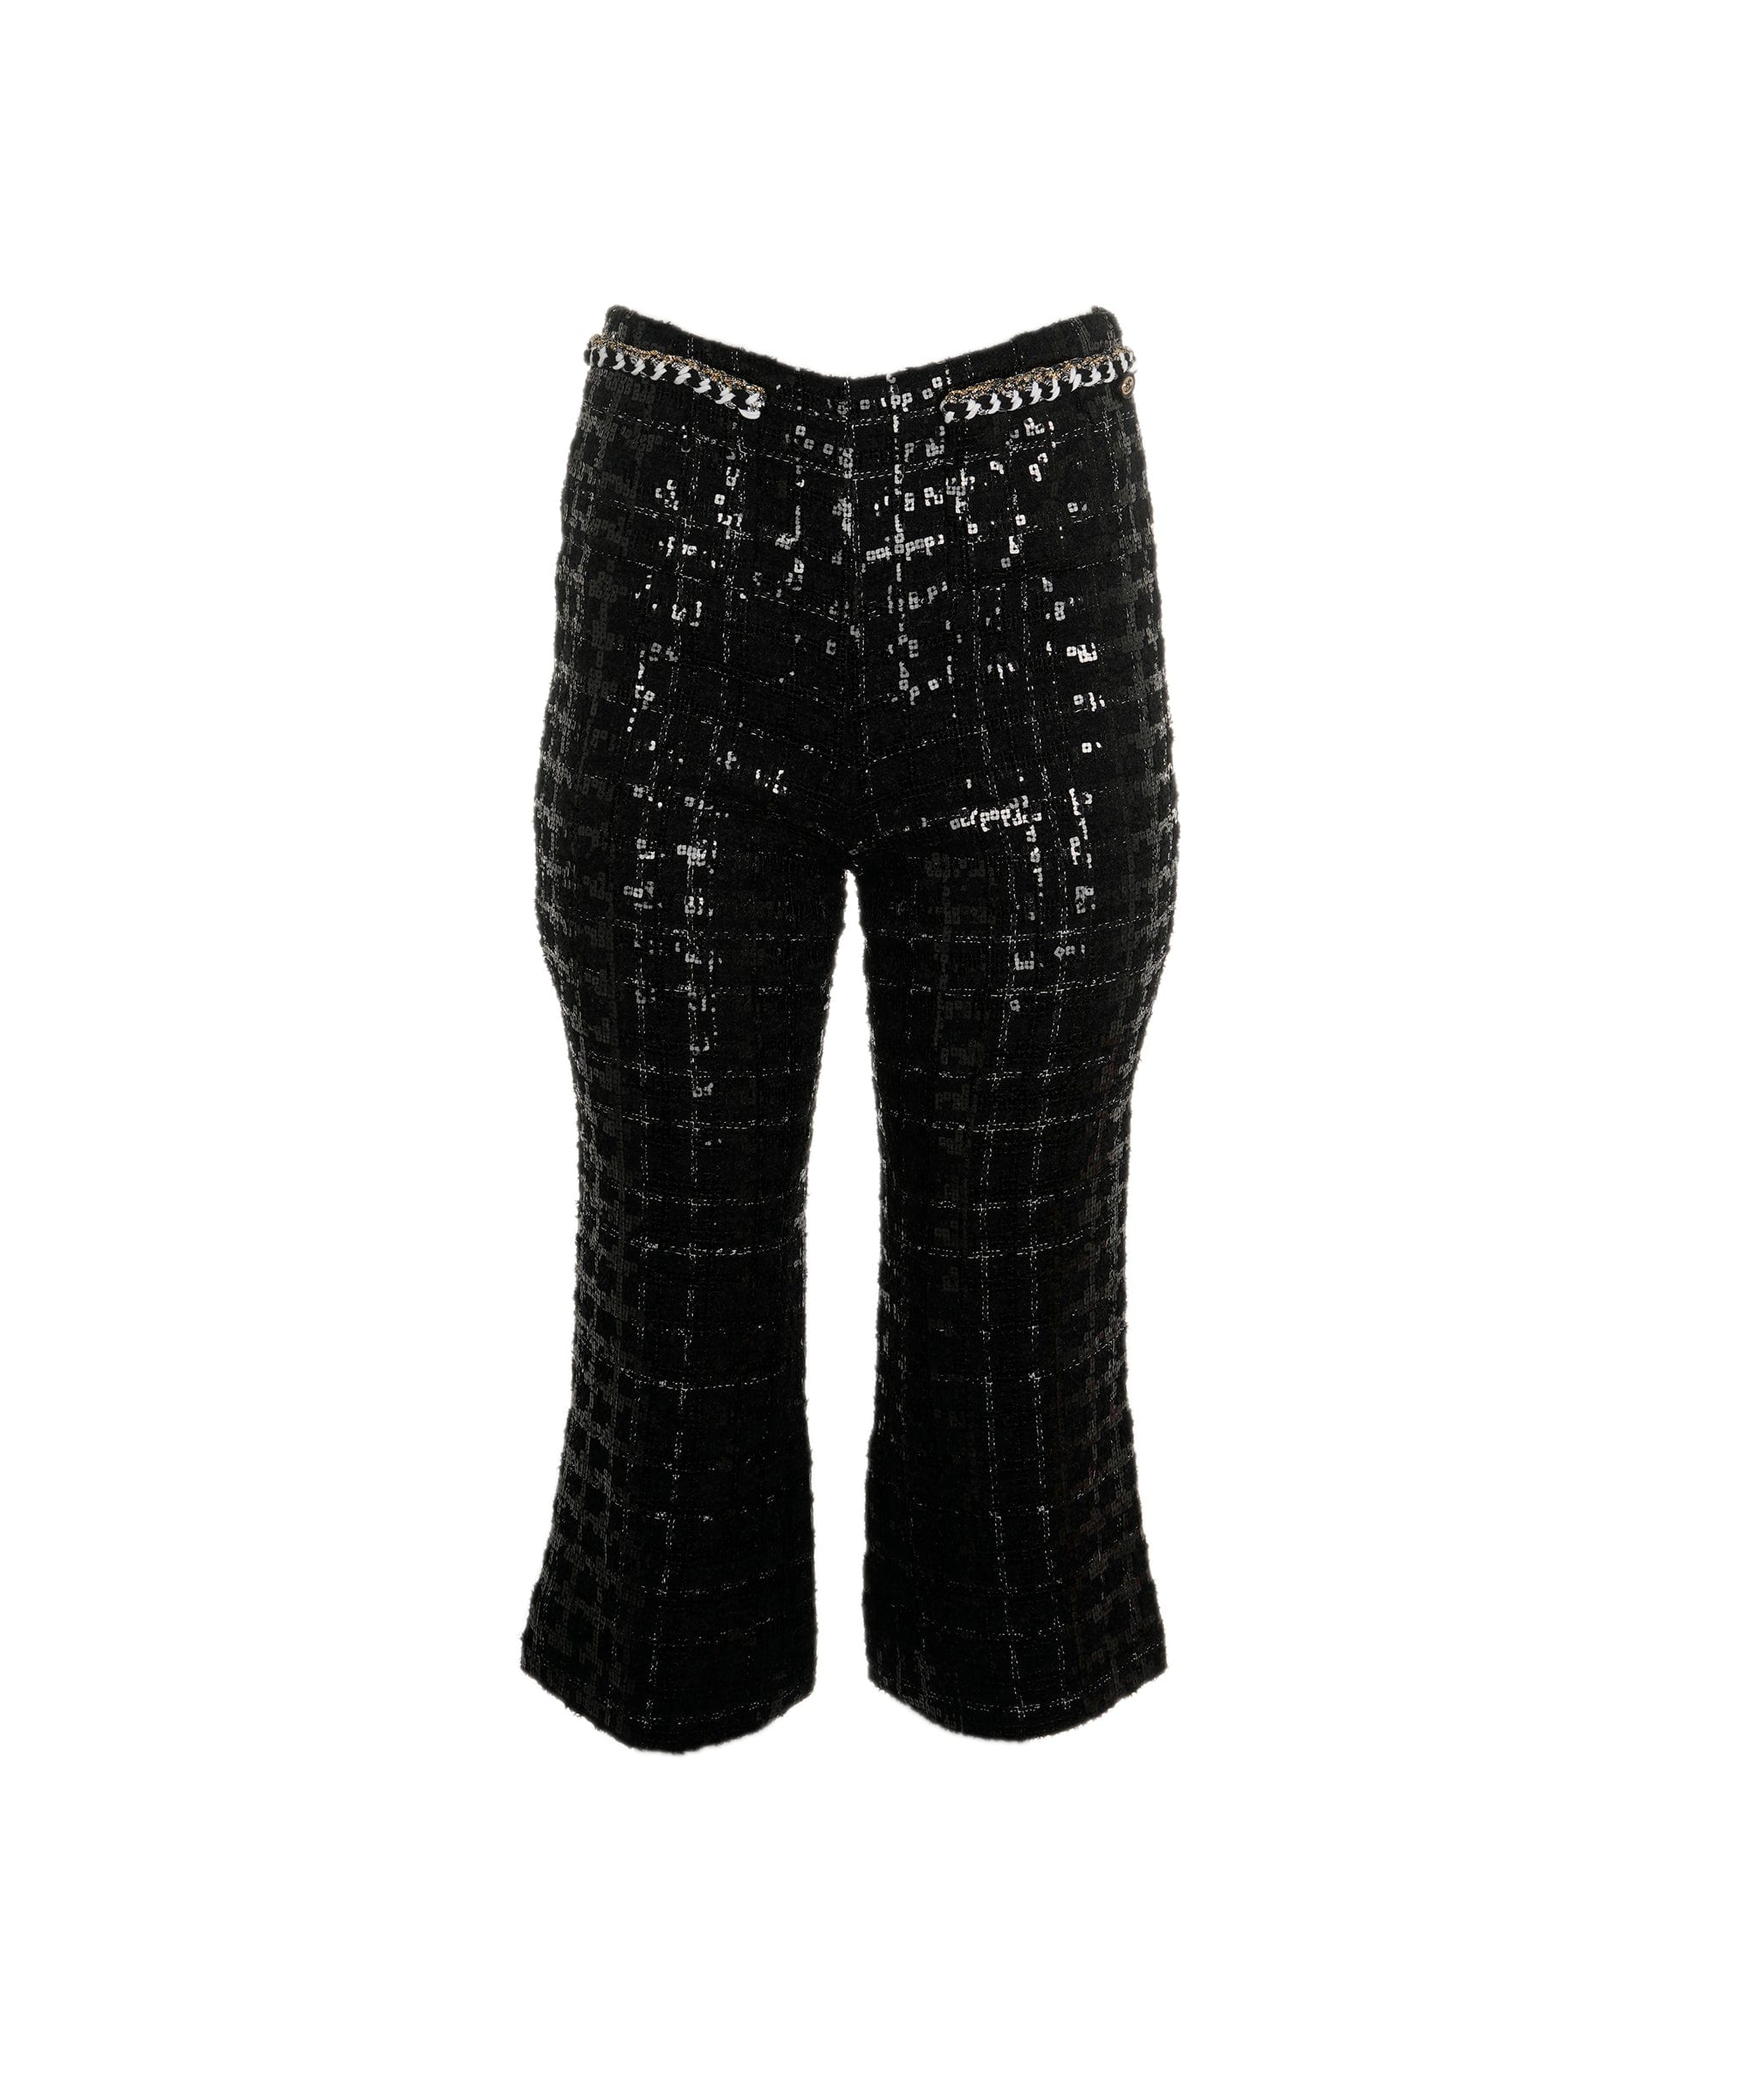 Chanel Pantalon Chanel noir sequins FR36 P70598V61864 AVC1633